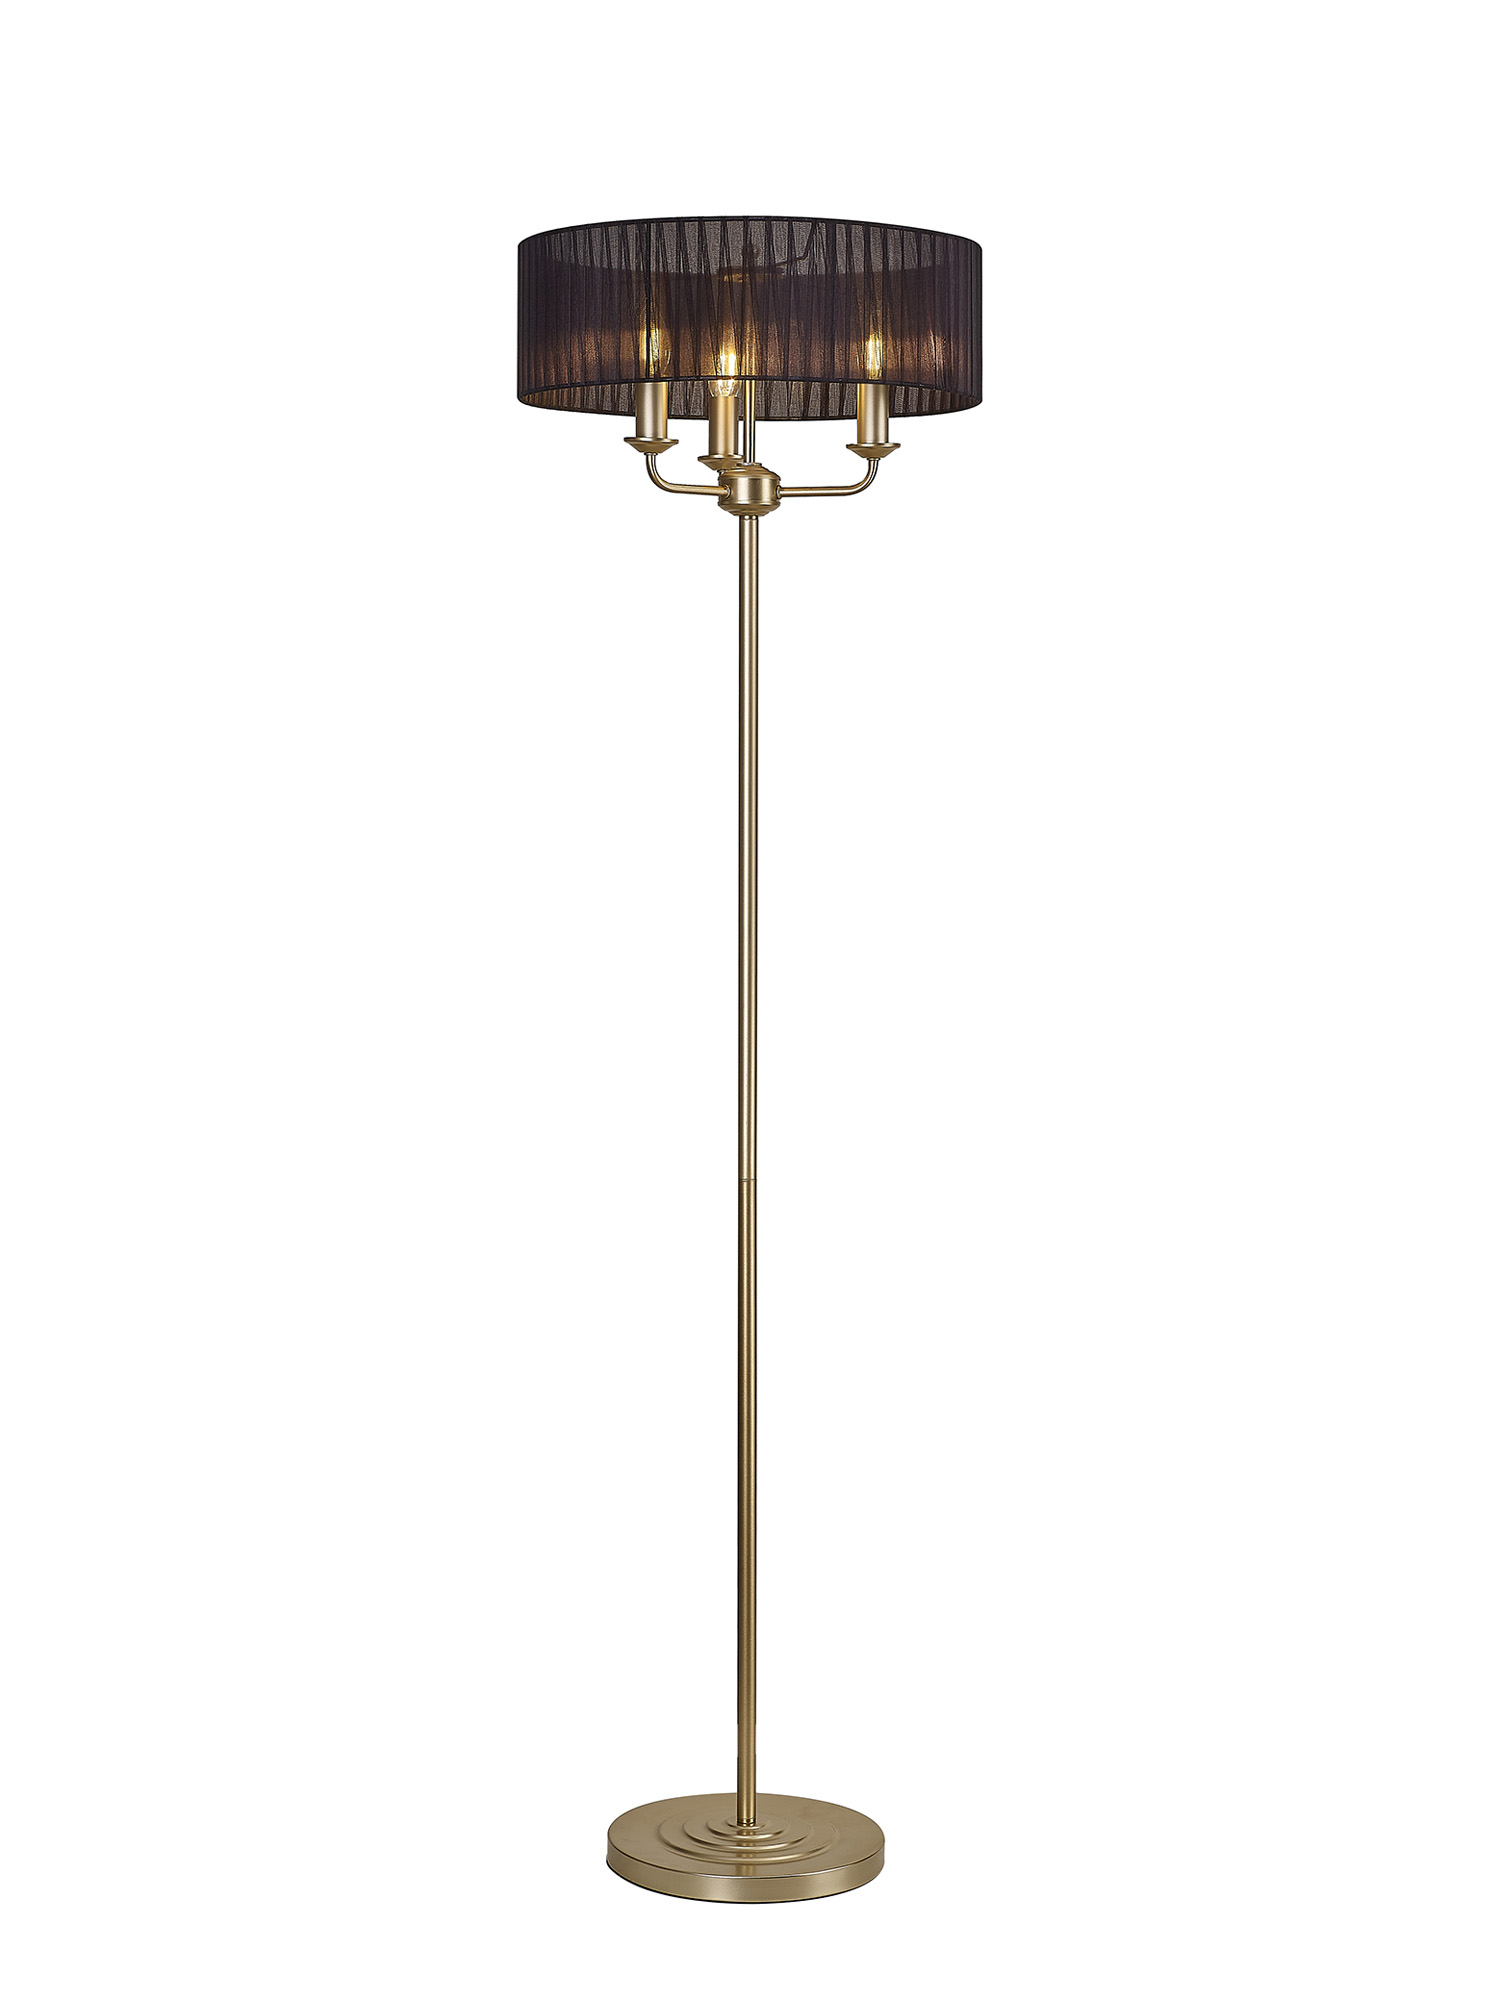 DK0994  Banyan 45cm 3 Light Floor Lamp Champagne Gold, Black